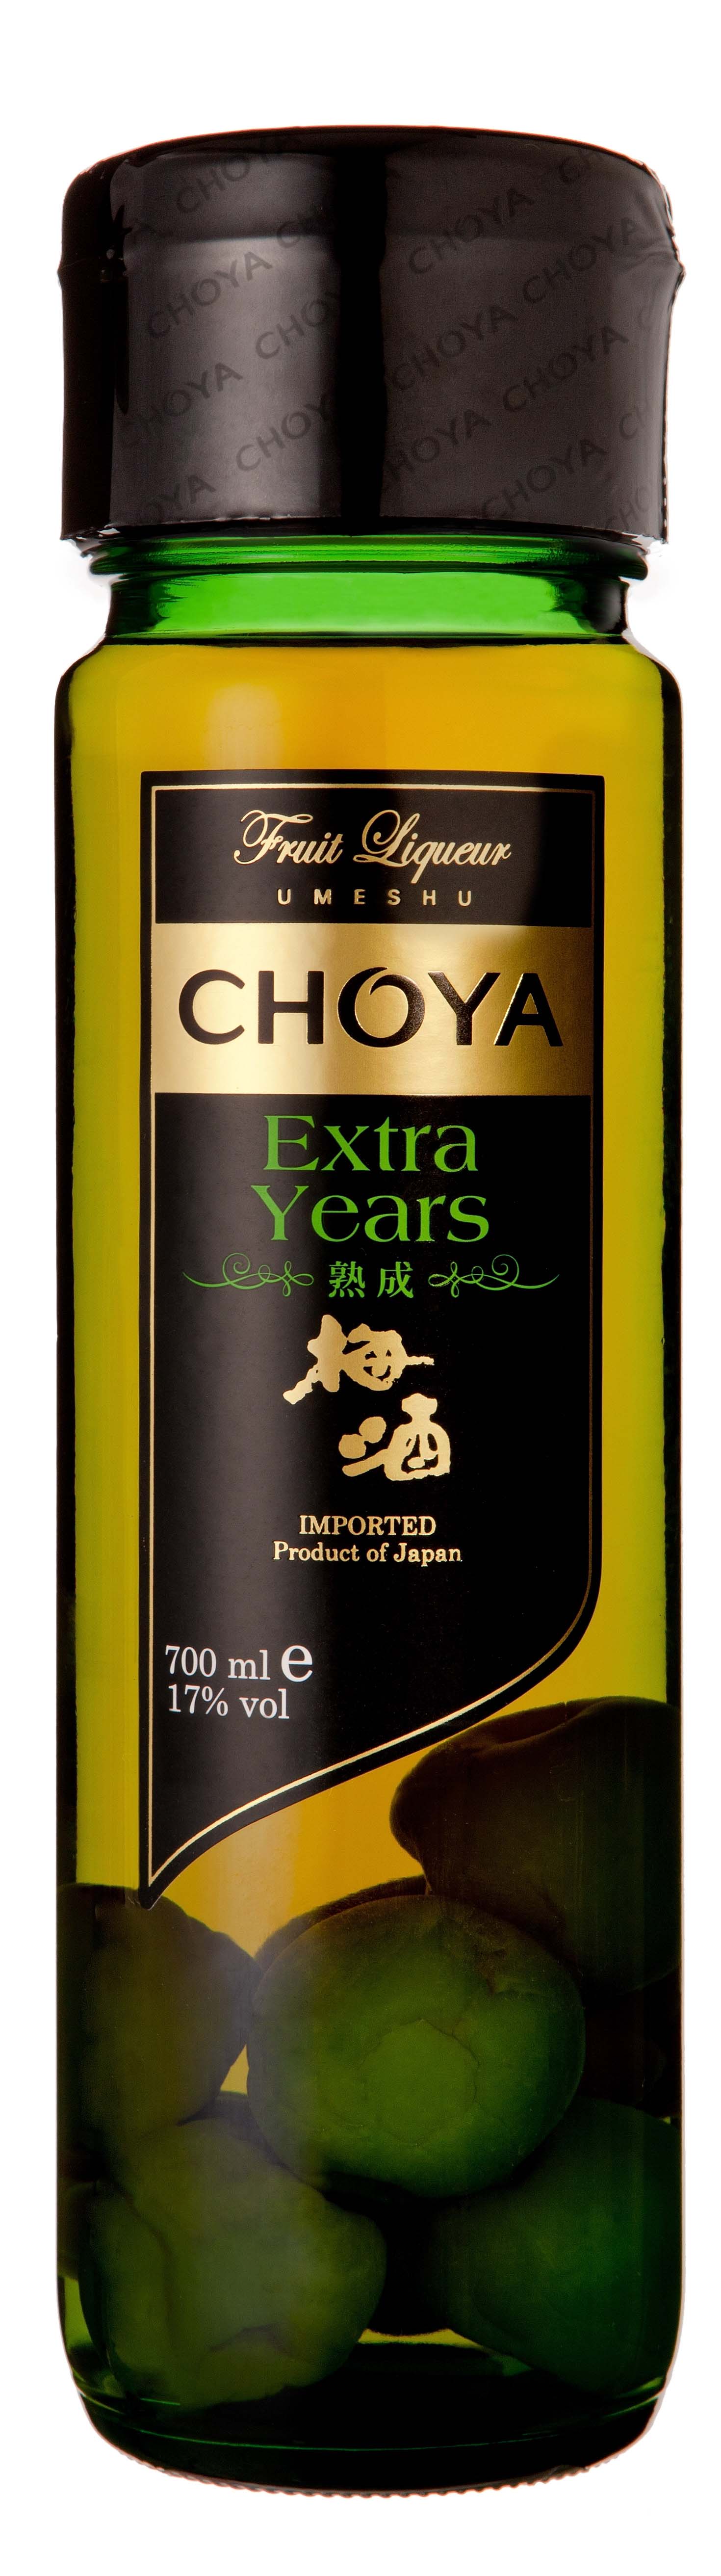 Choya Extra Years Japán umelikőr 0,7L 17%